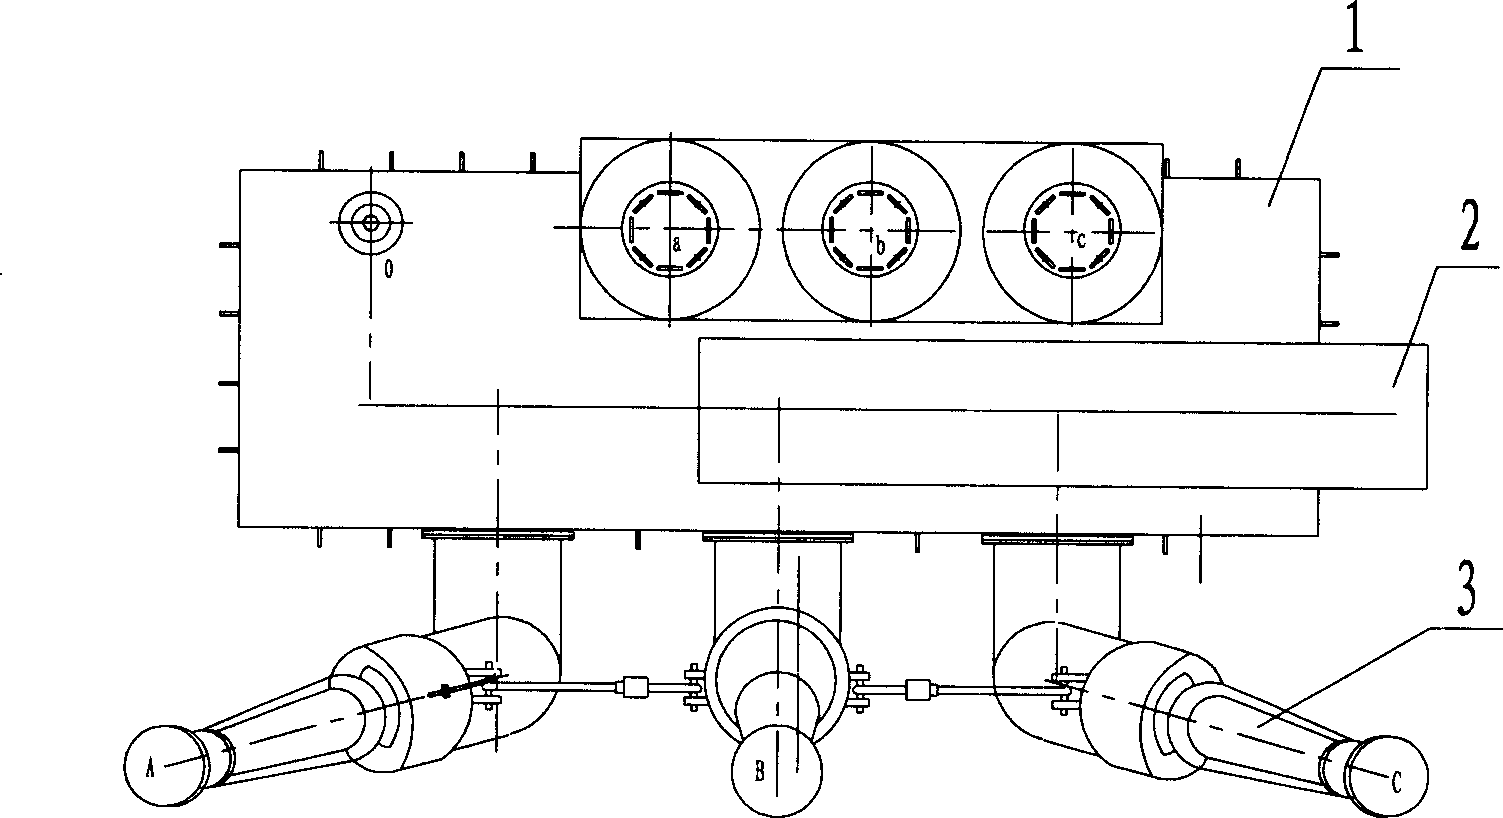 Generator transformer